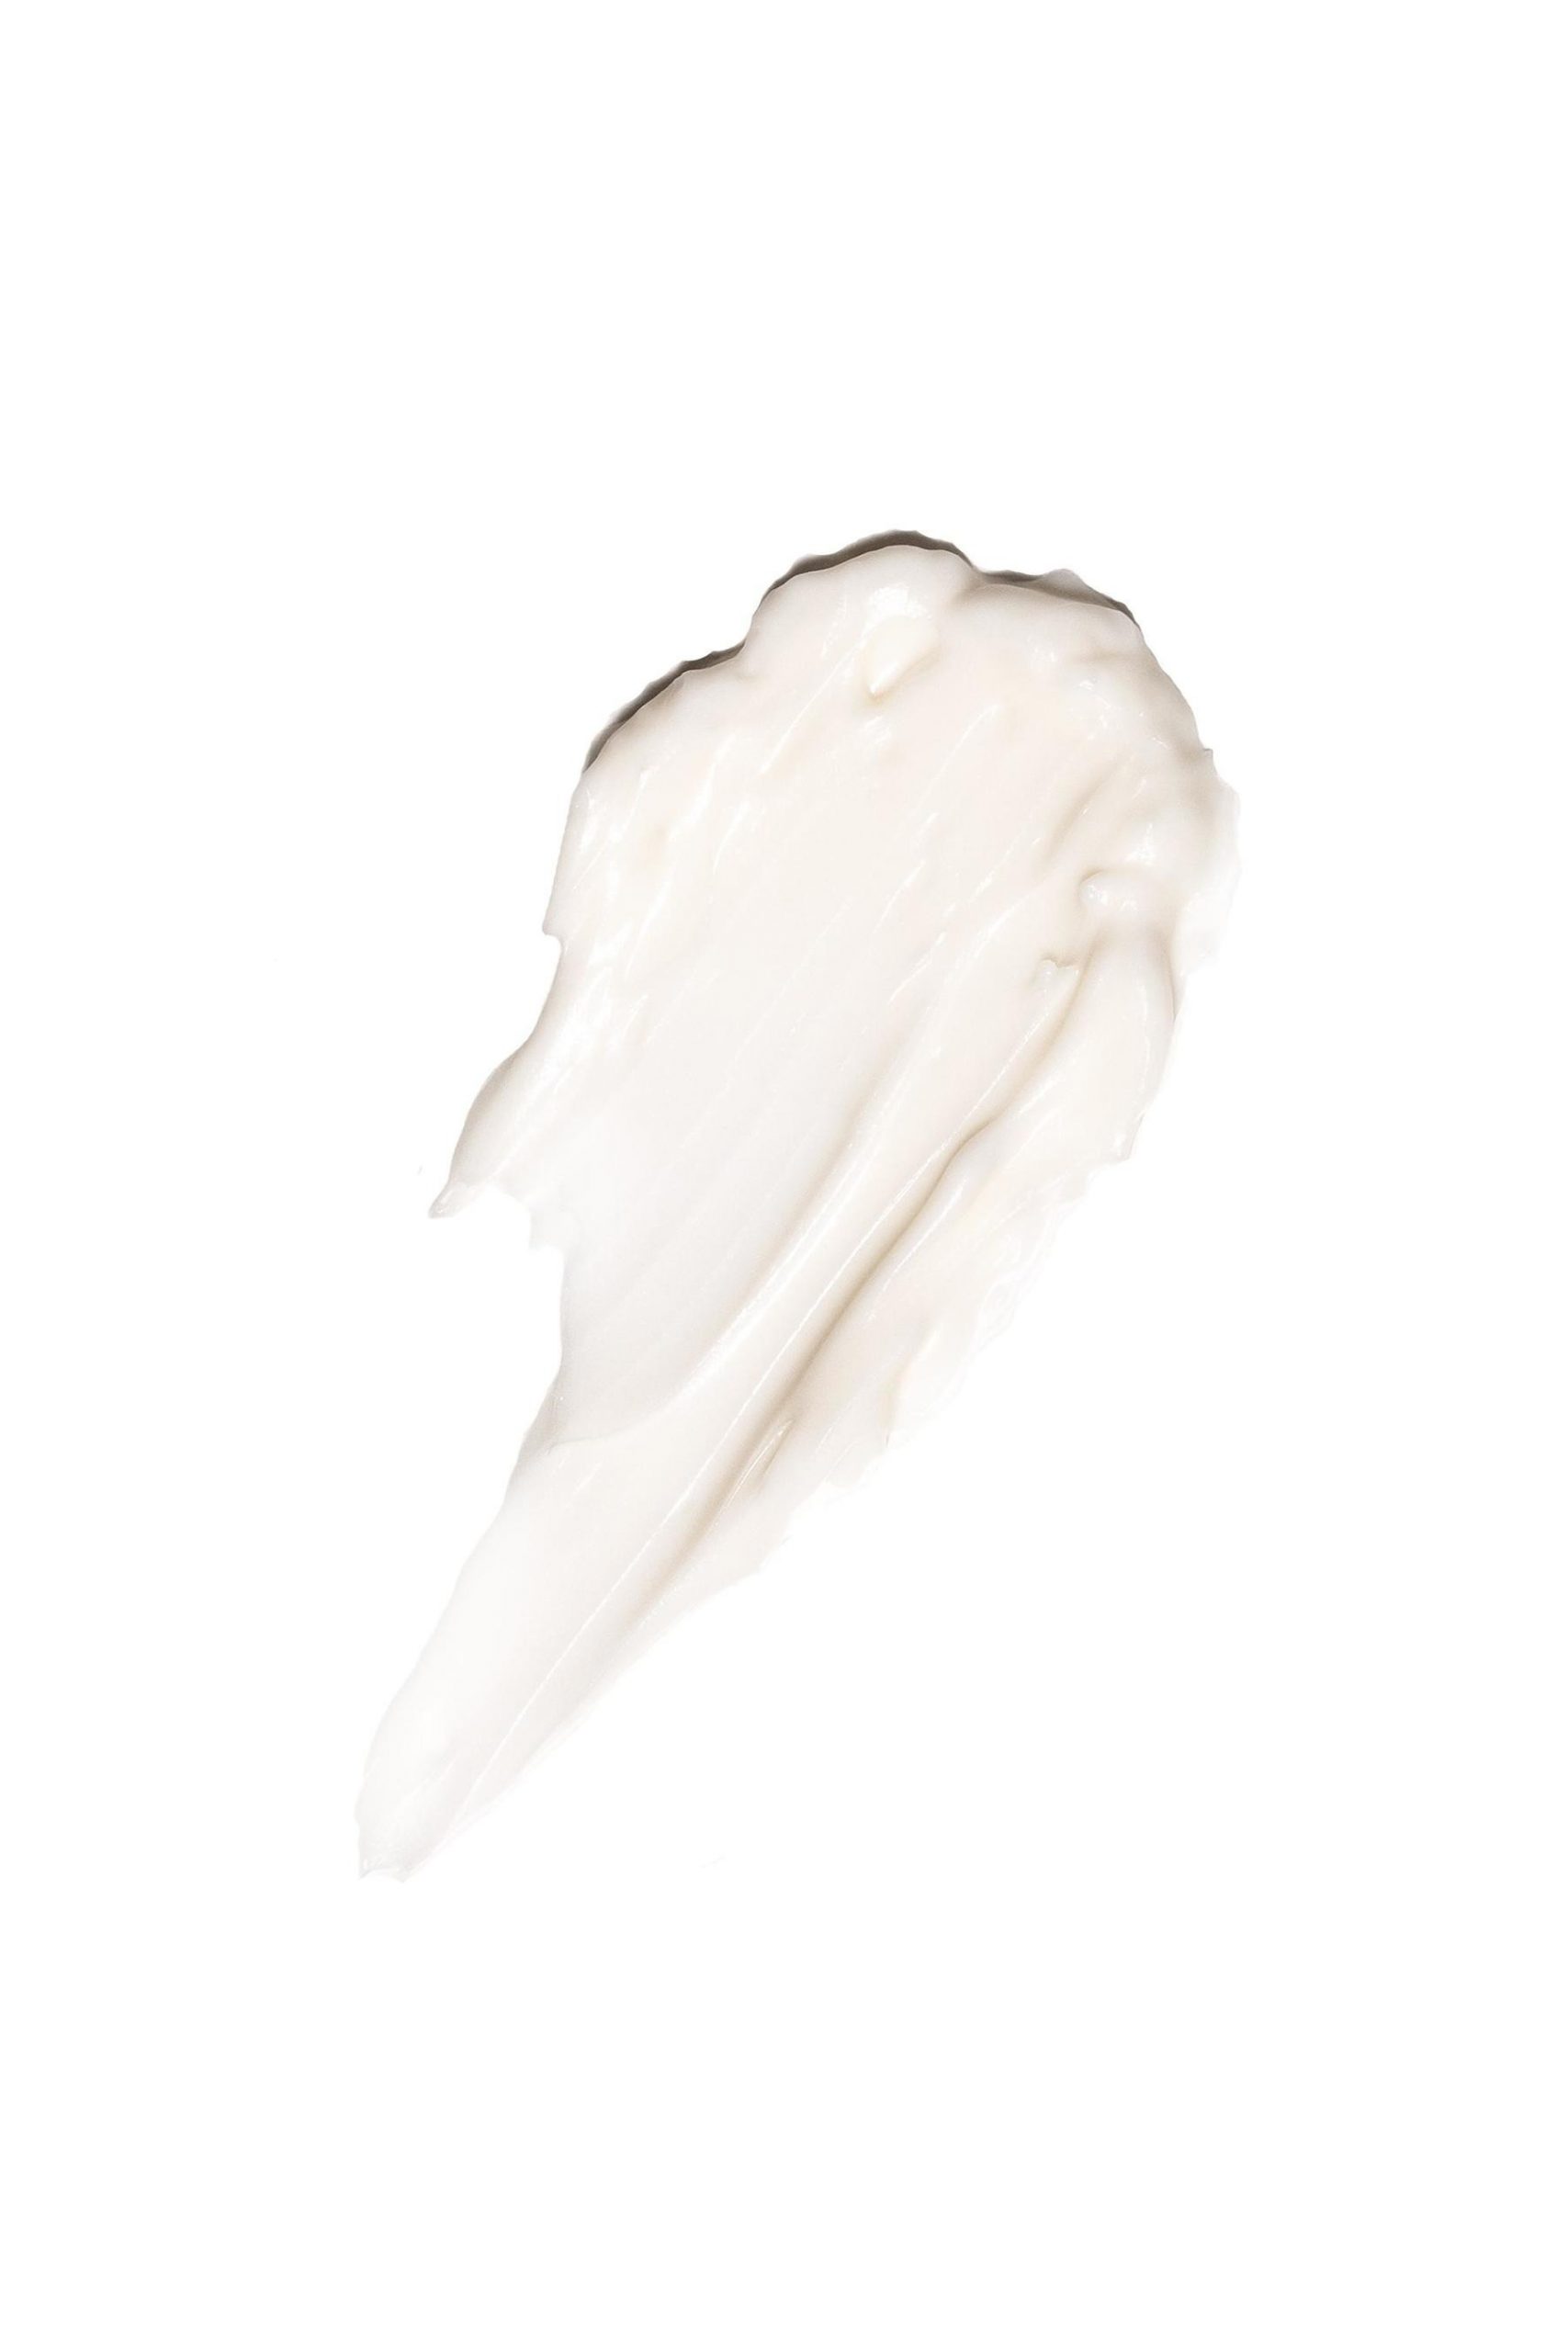 Buy Eve Lom Moisture Cream 50Ml From The Next Uk Online Shop concernant Eve Lom Moisture Cream 